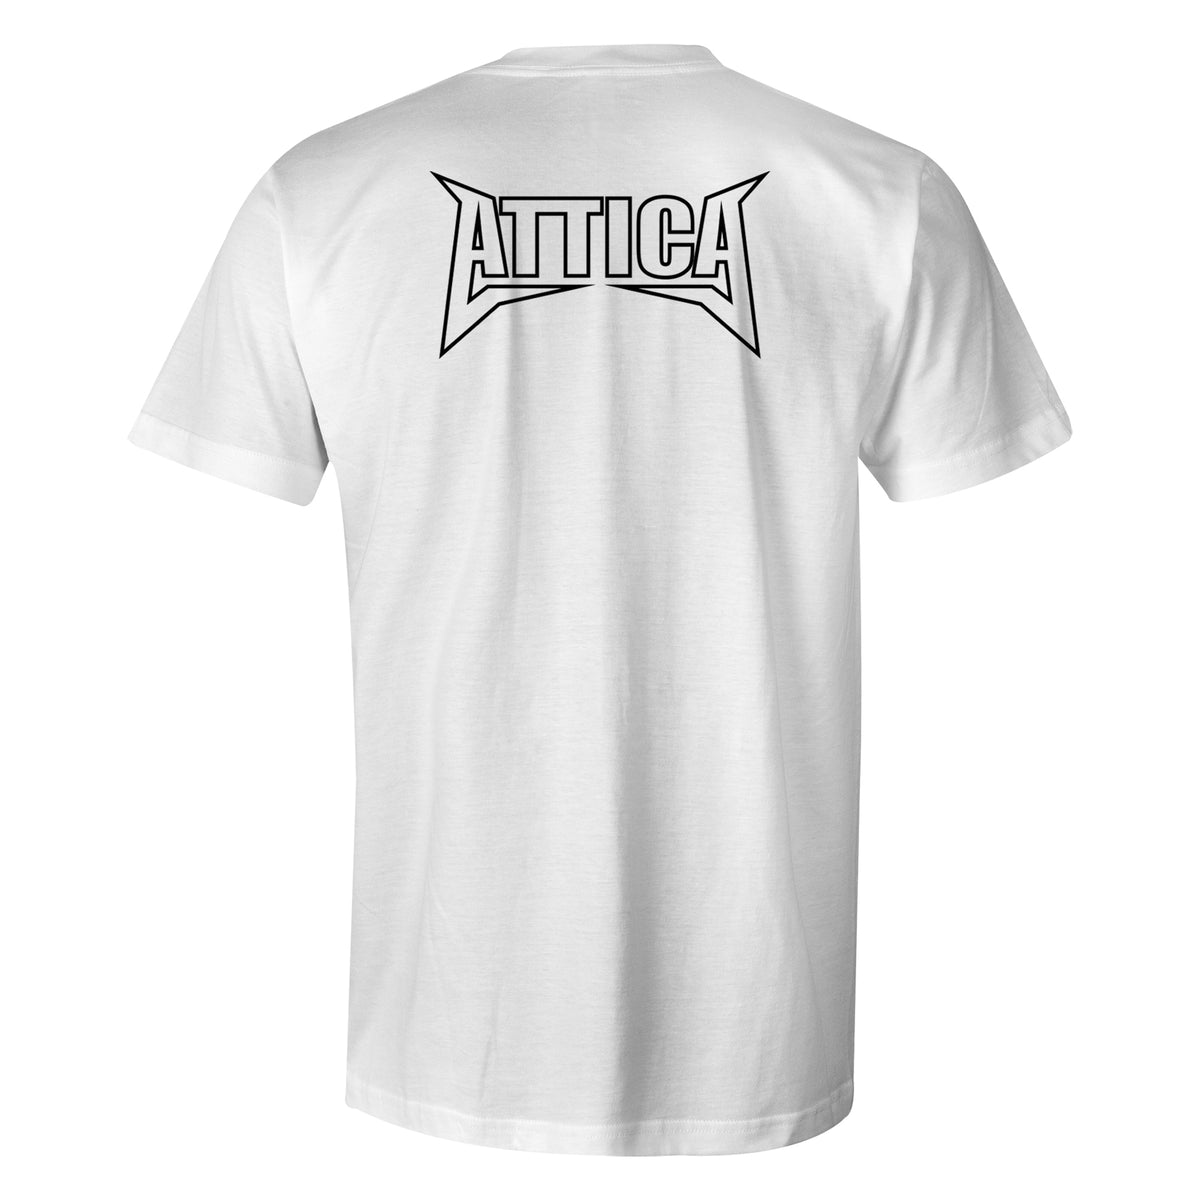 ATTICA 'Mental' T-Shirt - White - Nomad Bodyboards